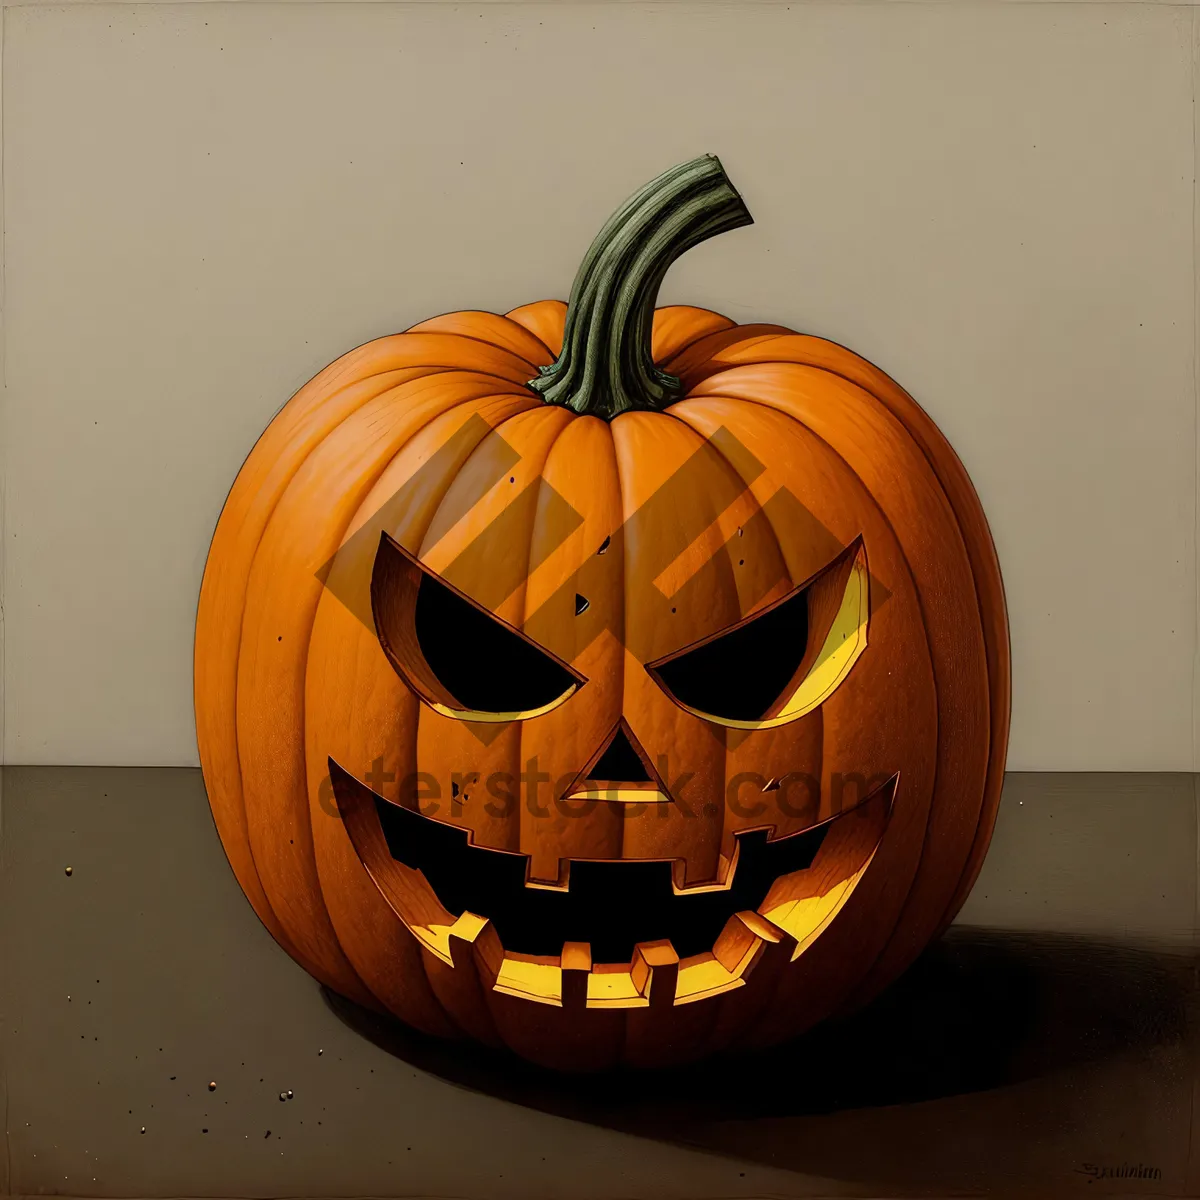 Picture of Fall Harvest Pumpkin Lantern - Spooky Halloween Decoration